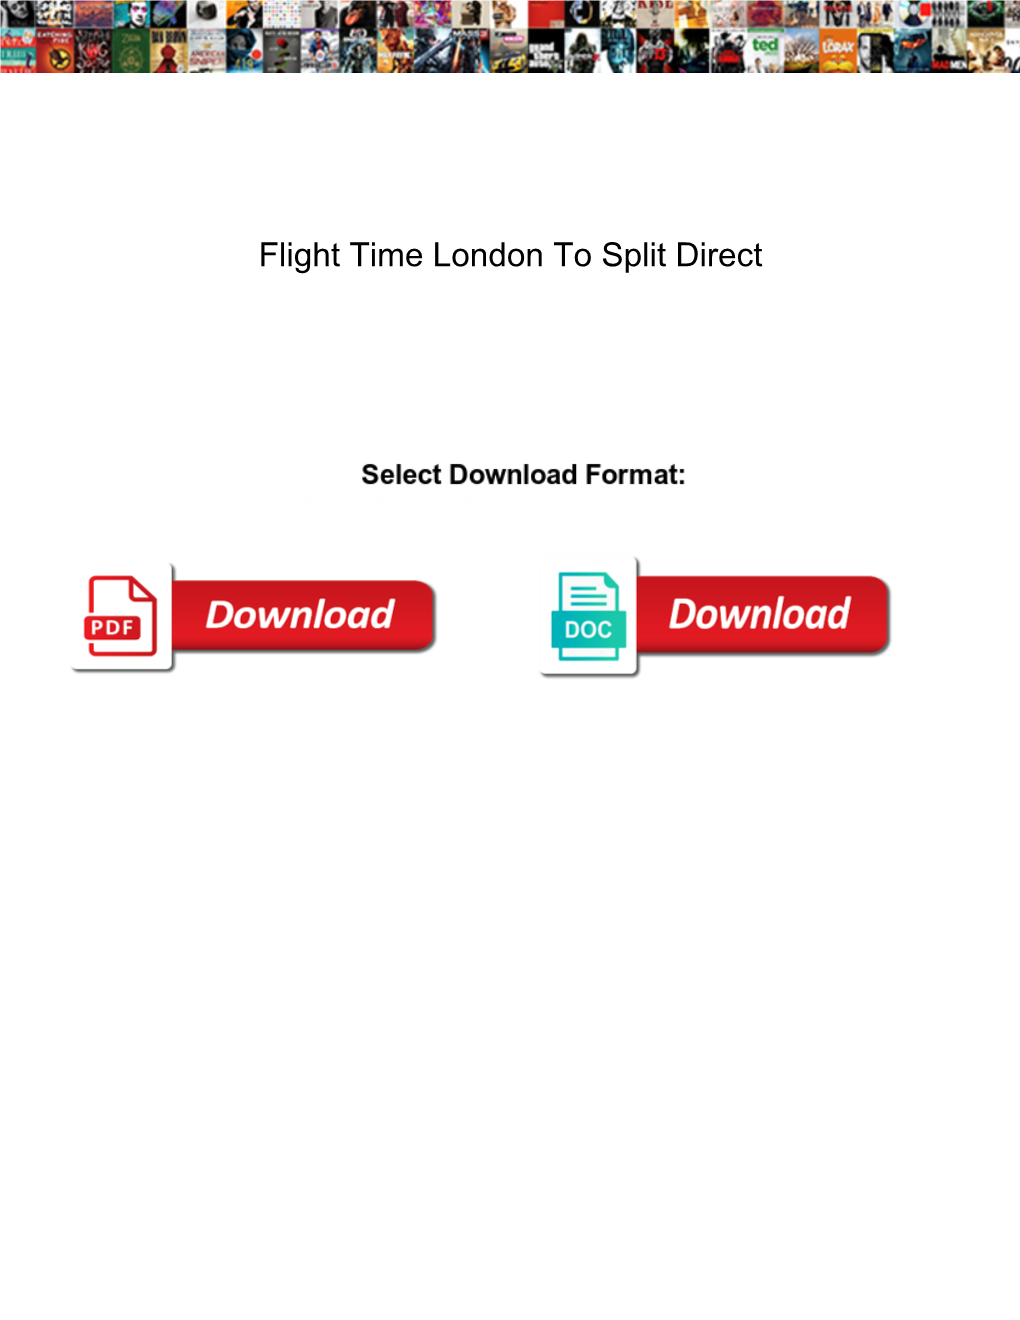 Flight Time London to Split Direct